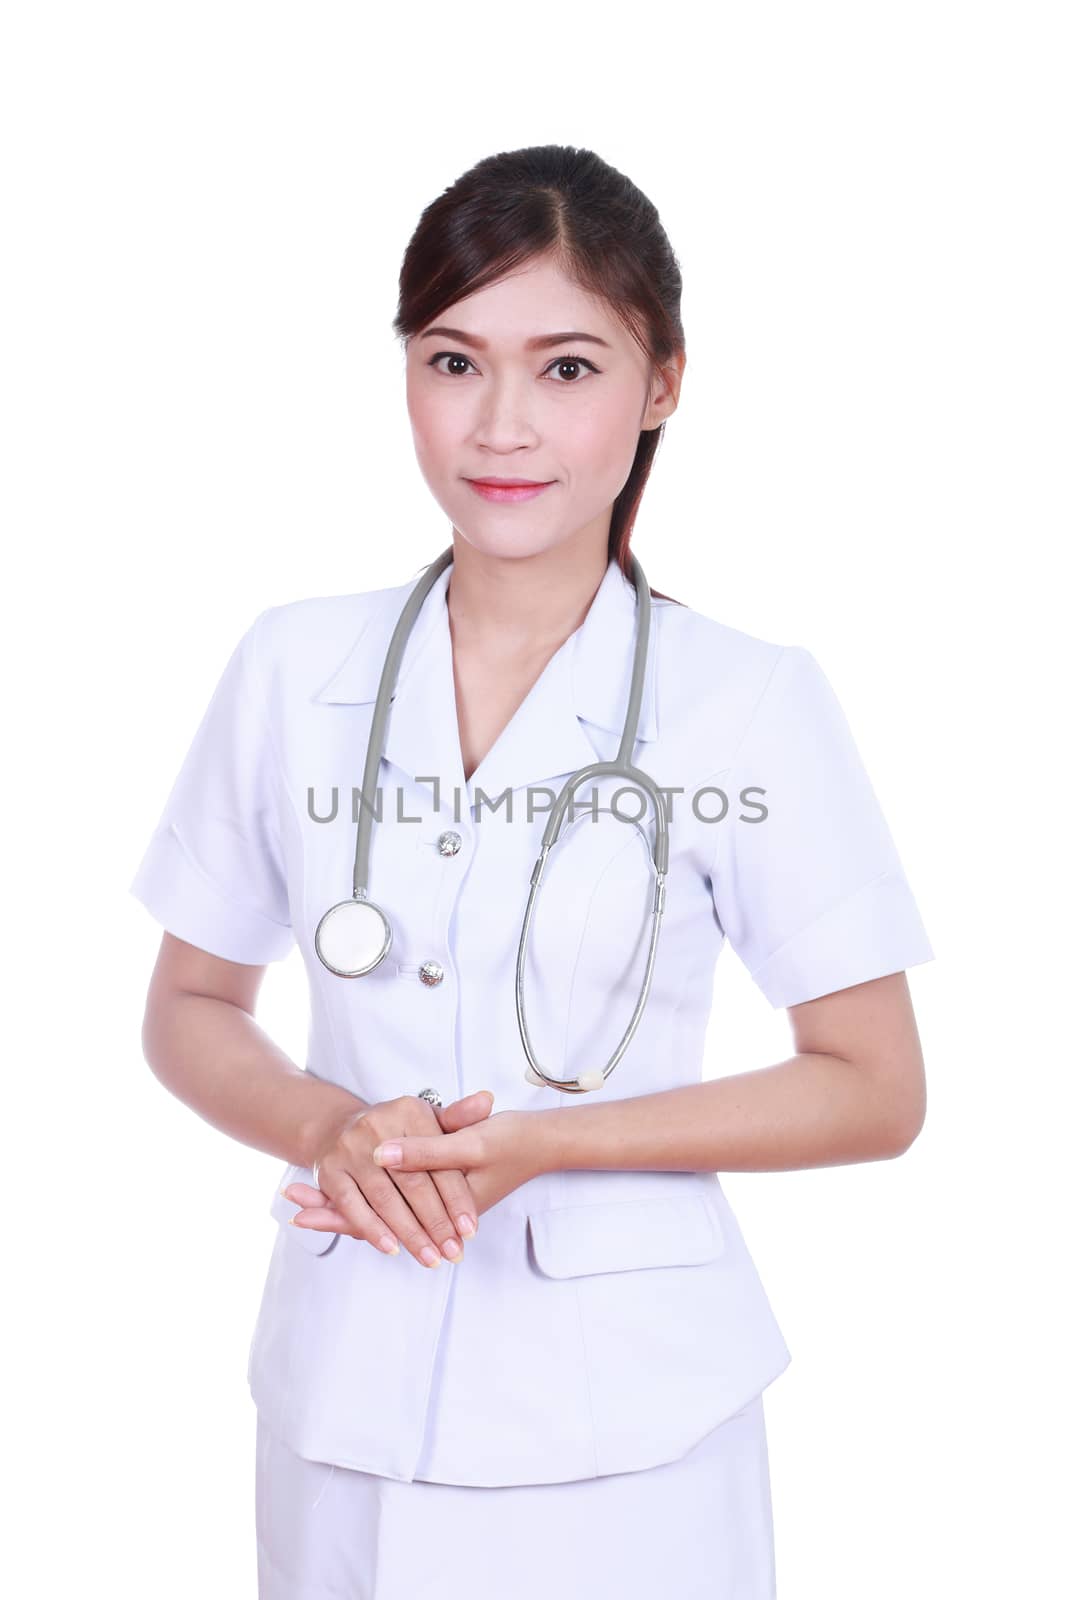 nurse with stethoscope isolated on white background by geargodz